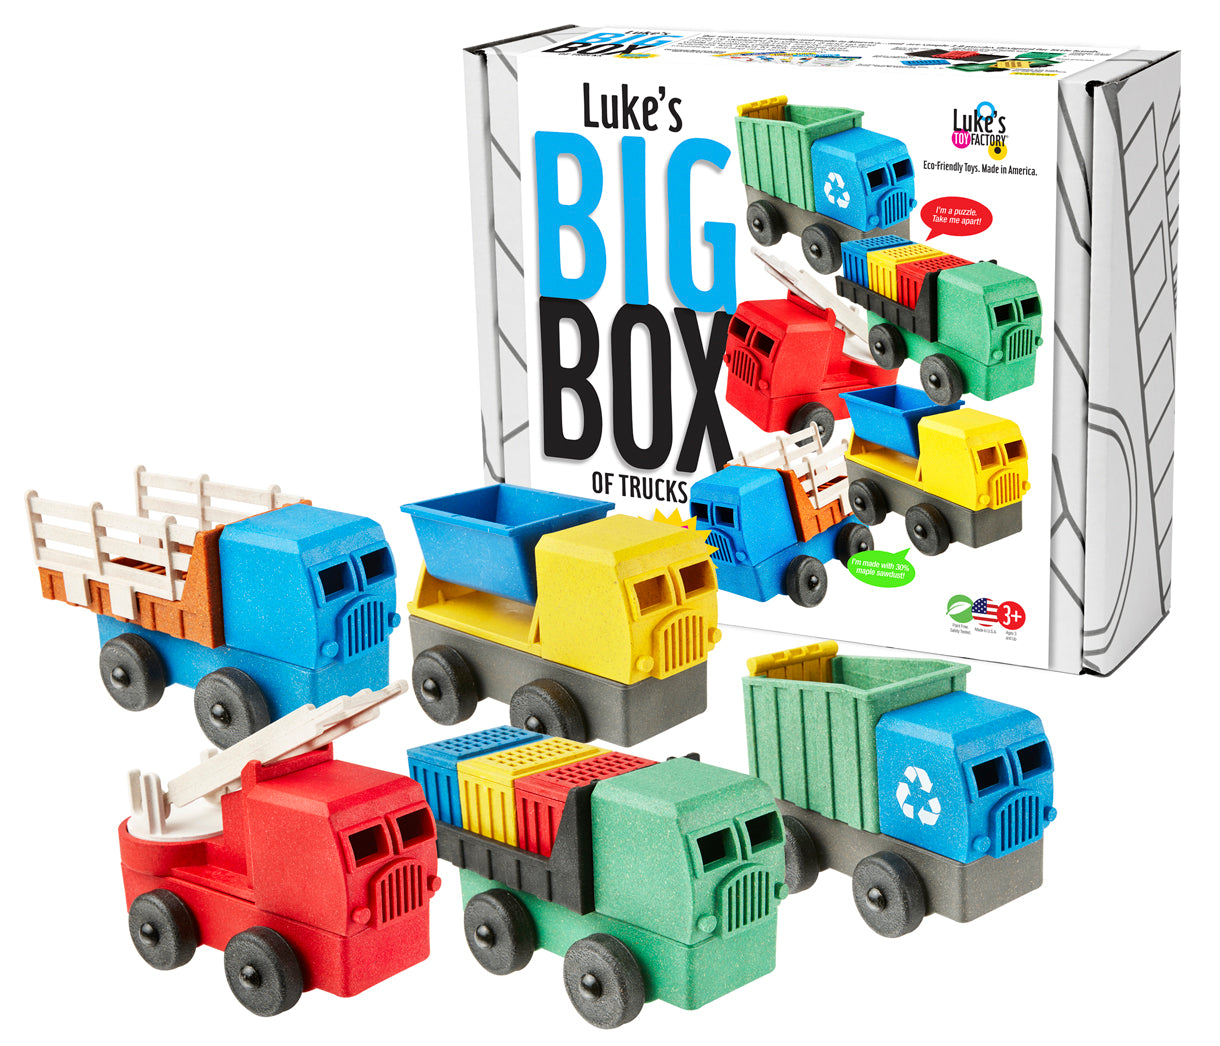 Luke's Big Box of Toy Trucks for preschool aged kids. 